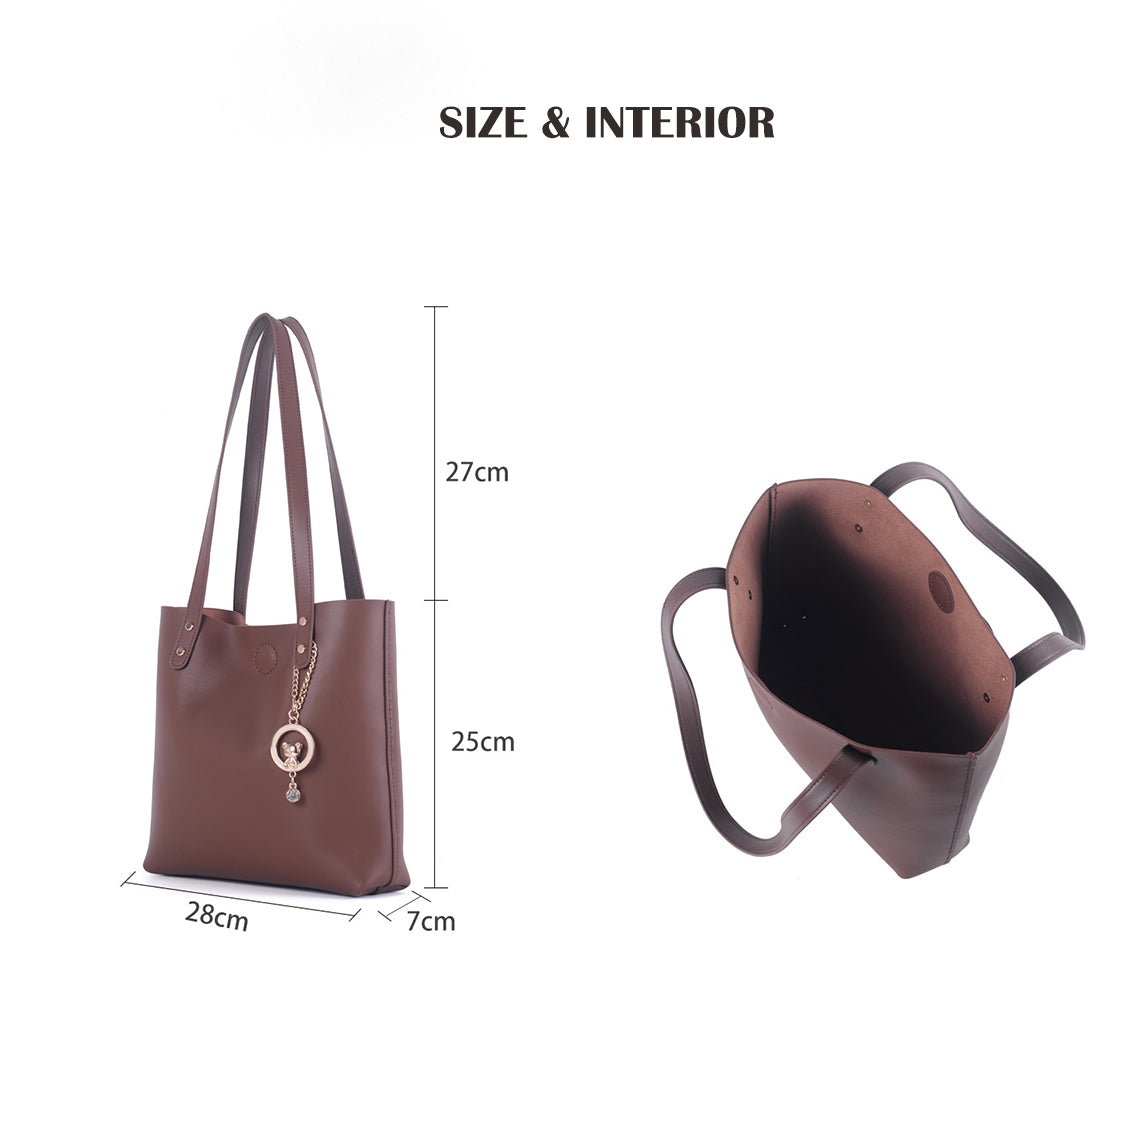 POPSEWING® DIY Handmade Tote Bag Size & Interior